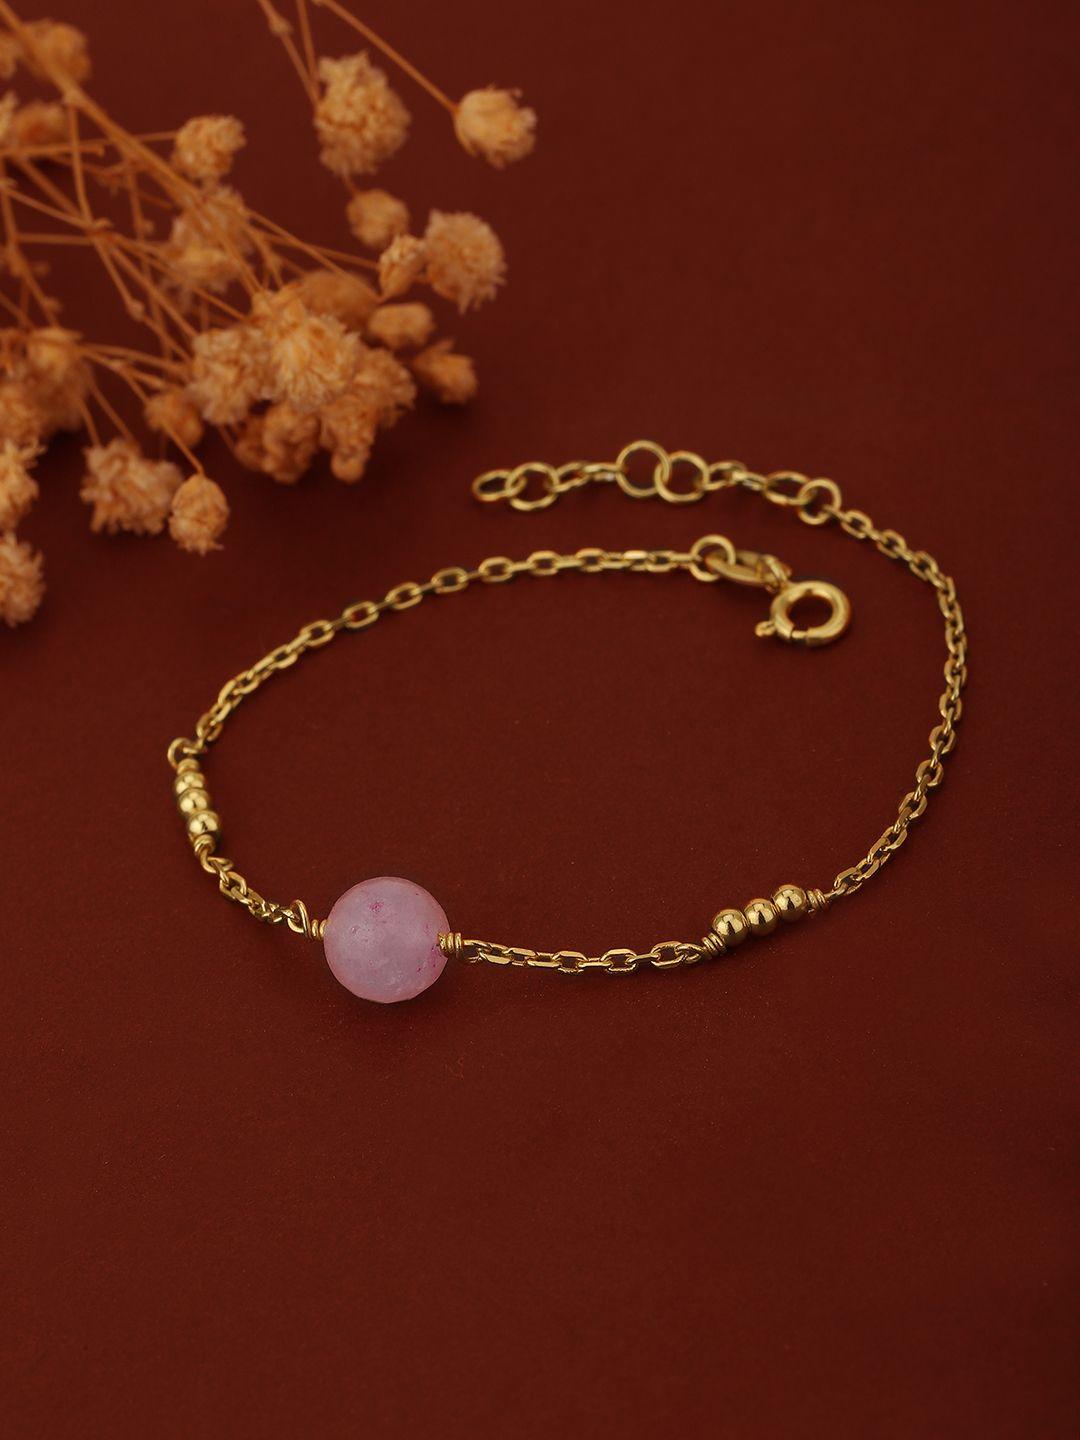 carlton london gold-plated pink opal studded handcrafted bracelet